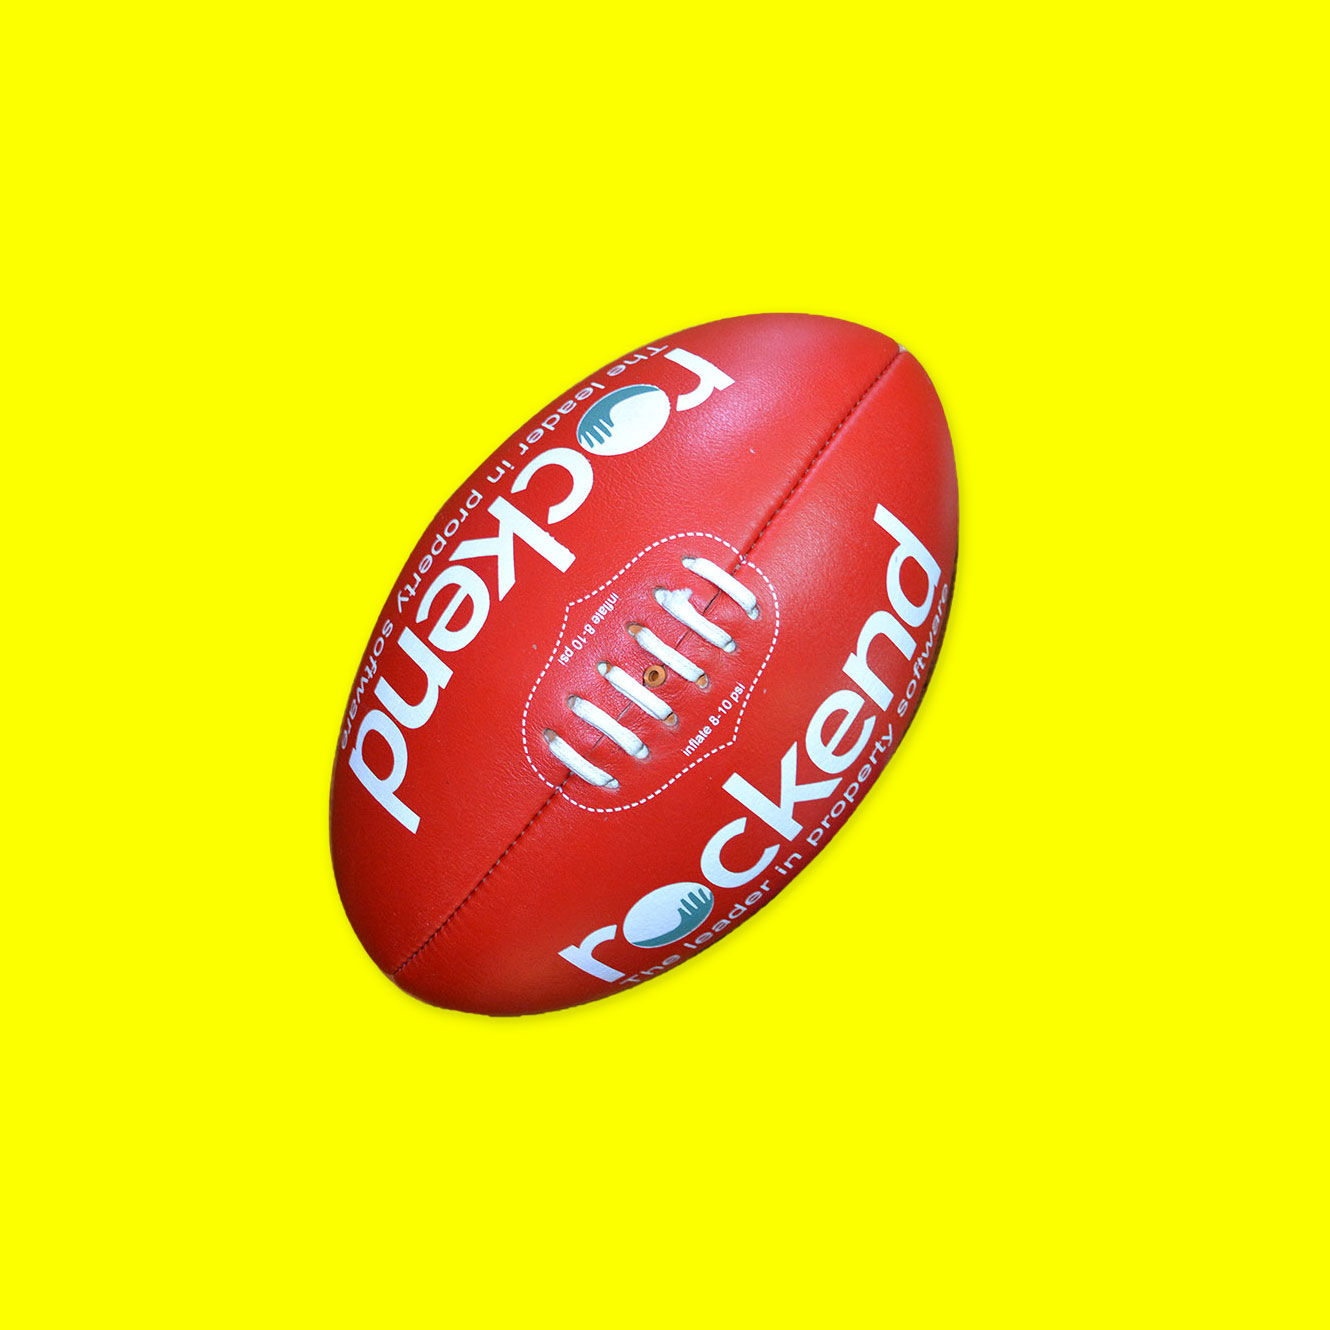 https://bigbanner.com.au/wp-content/uploads/2020/01/Branded-Footy-Football-1.jpg